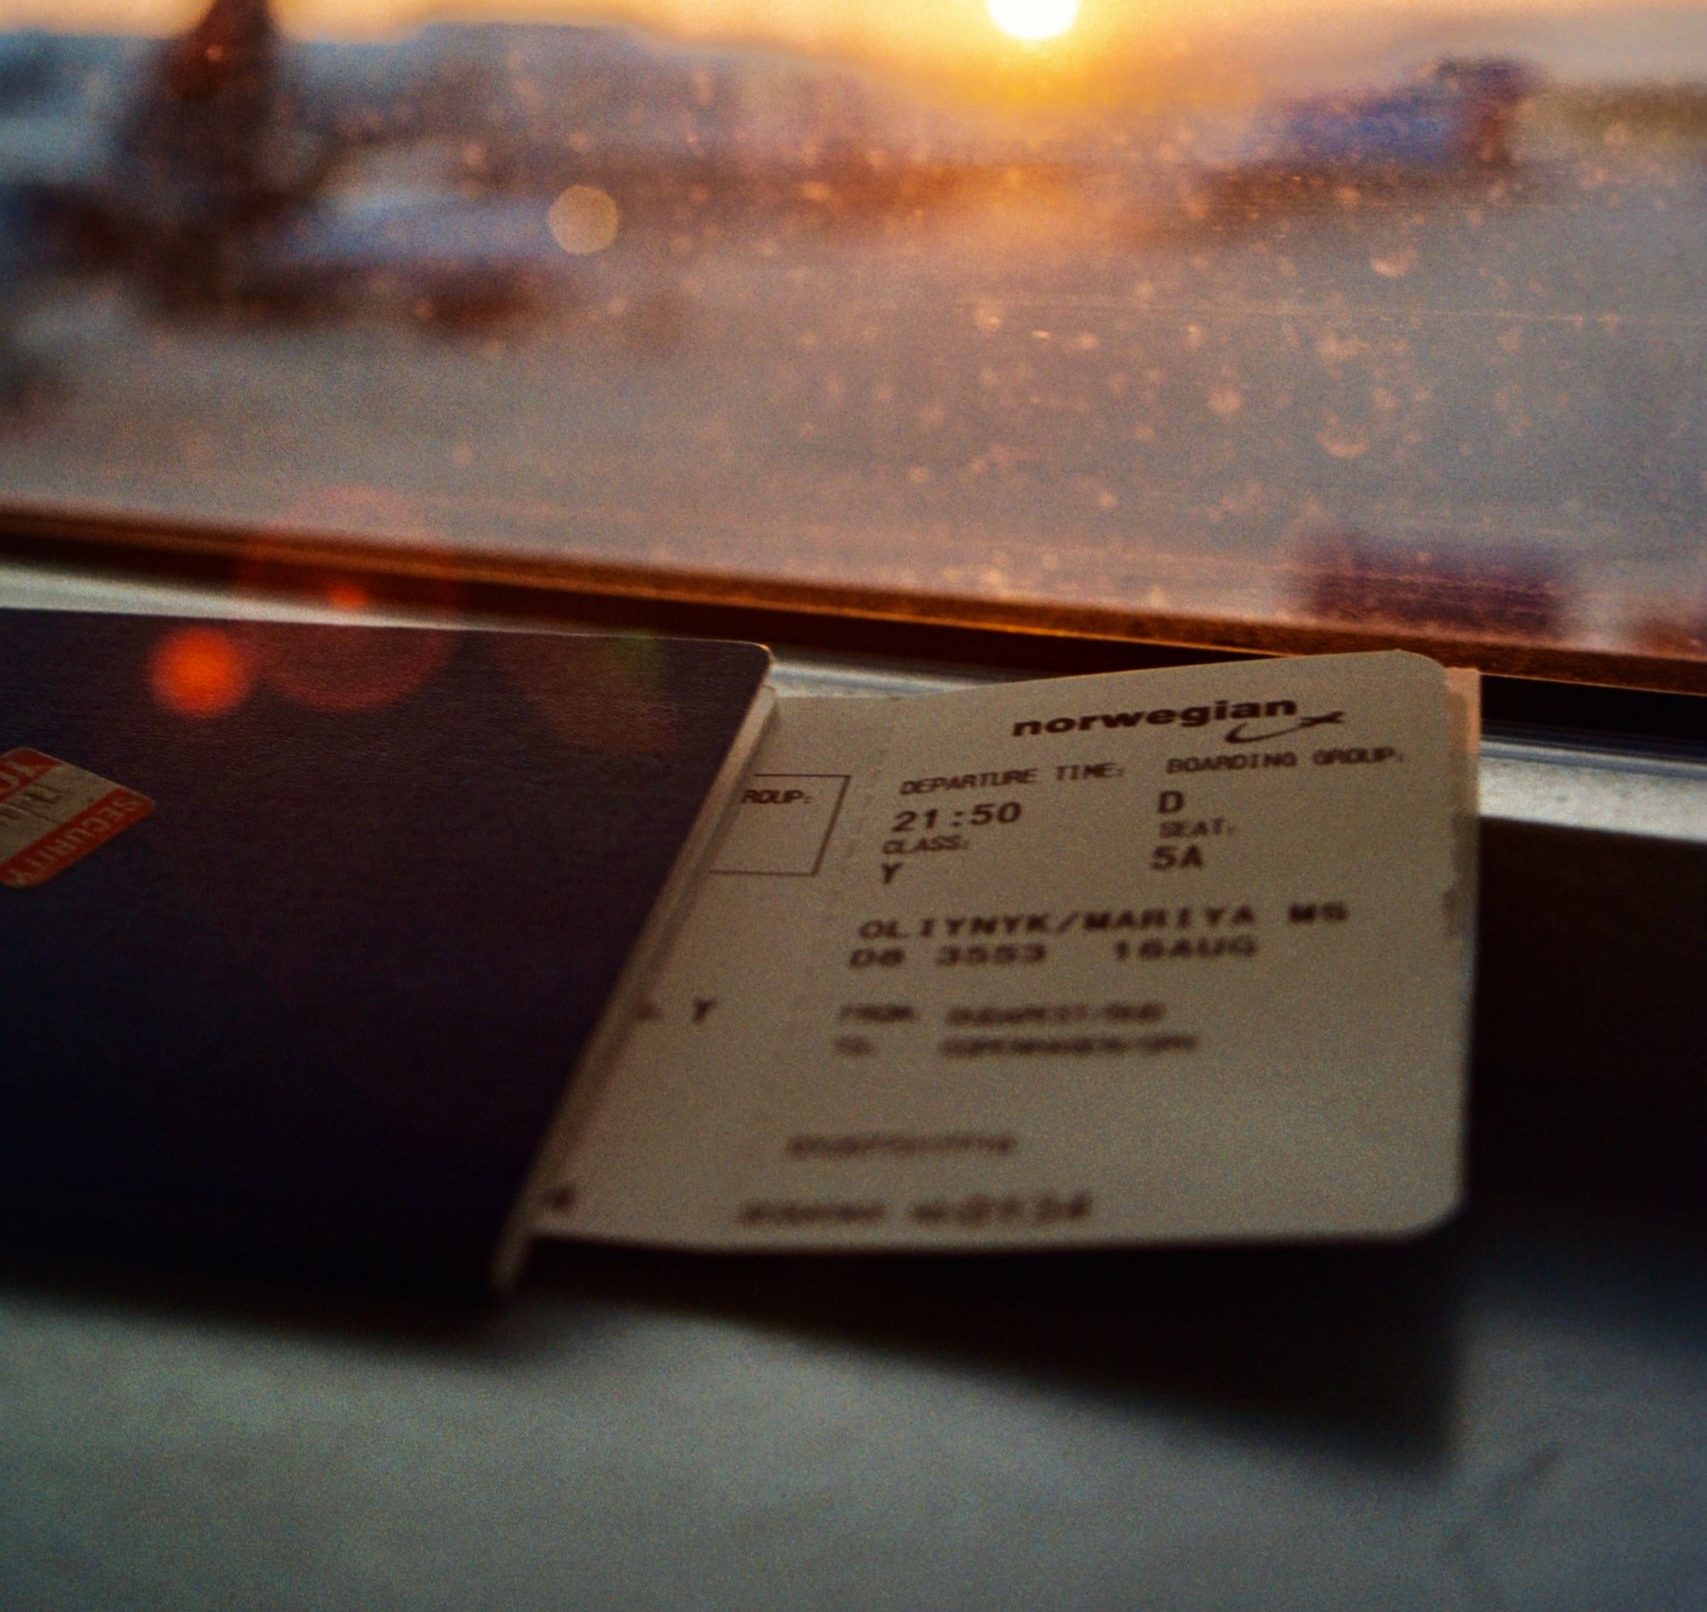 Plane ticket